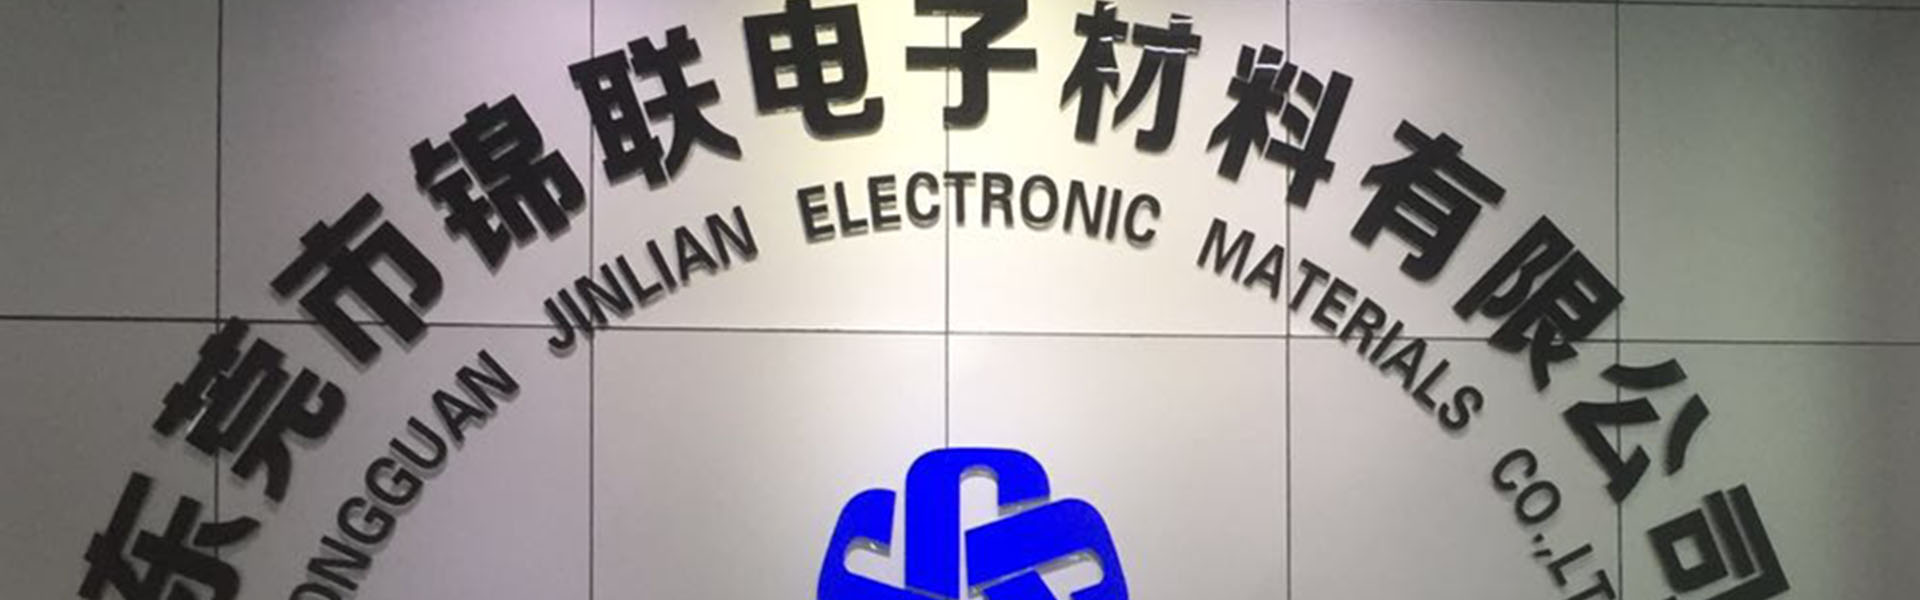 Blisterverpakking, dienblad, draagband,Dongguan Jinlian Electronic Materials Co., Ltd